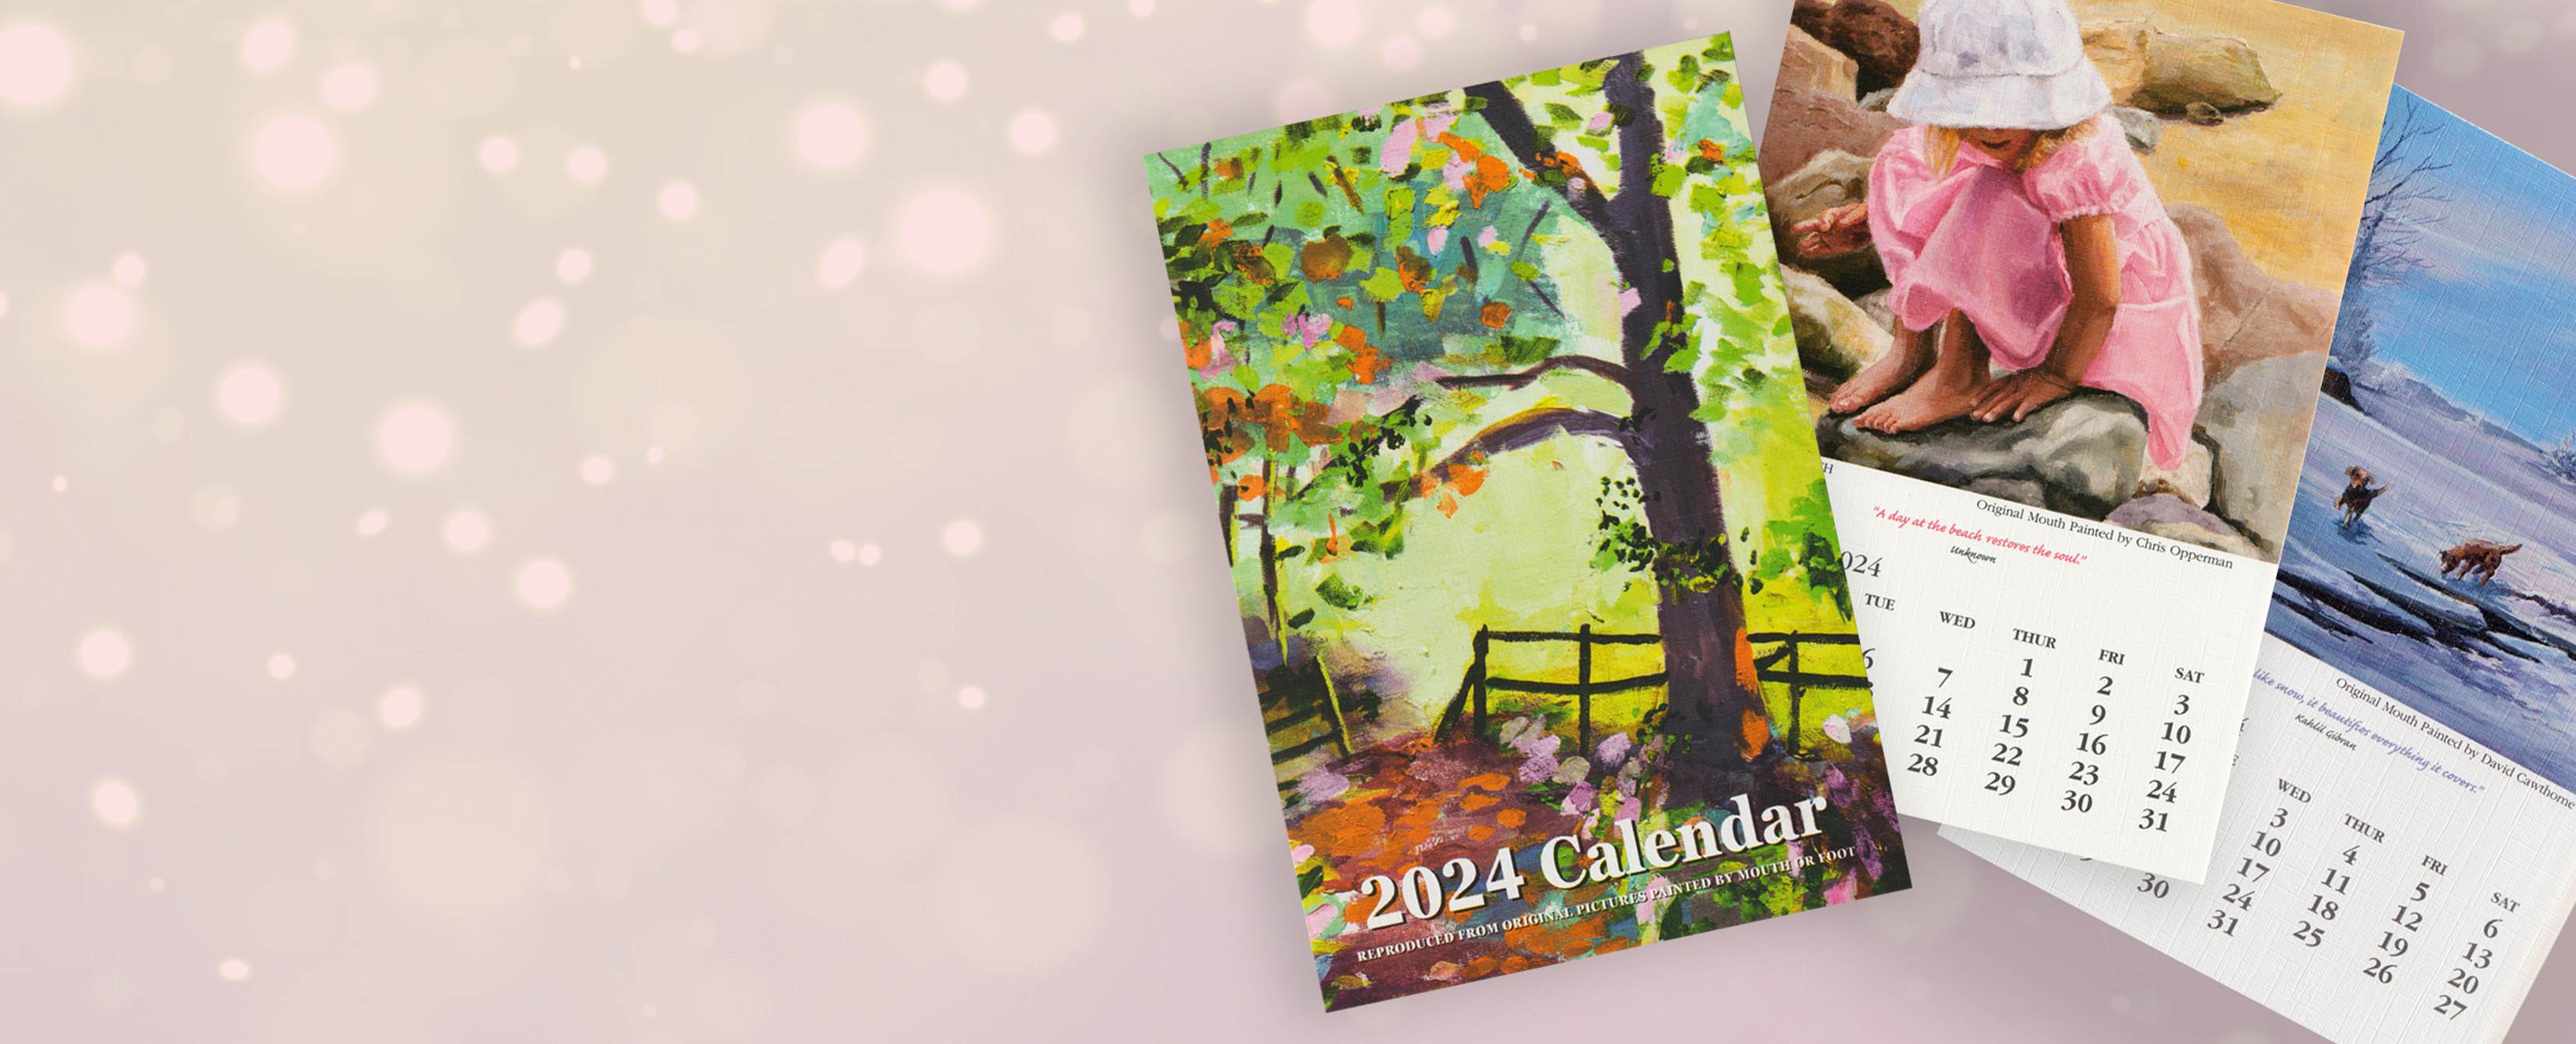 MFPA Christmas Shop Sliders Calendar 2024 1